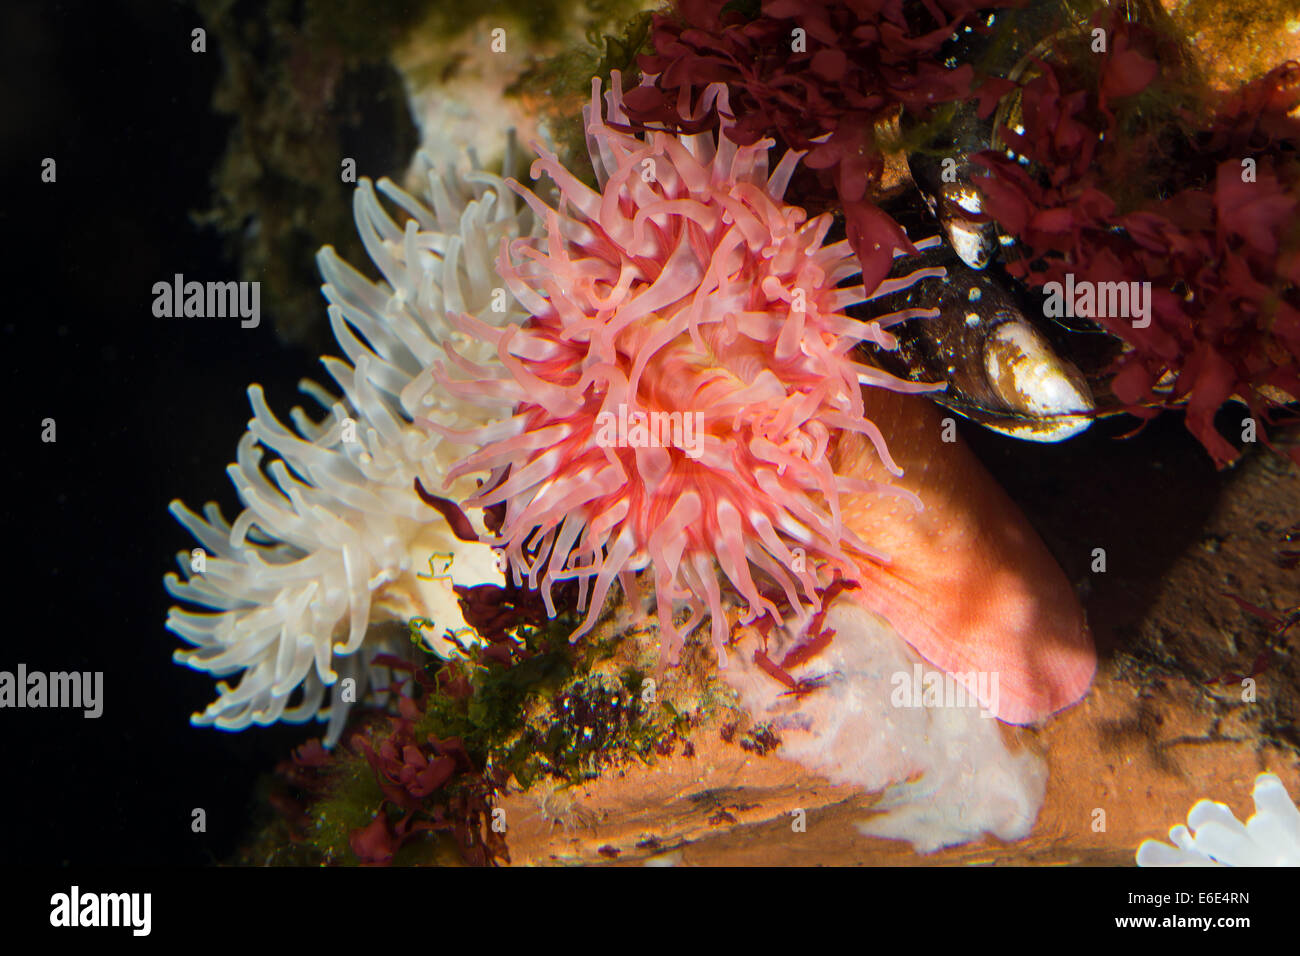 Rosso settentrionale anemone, dahlia anemone, Dickhörnige Seerose, Braune Seedahlie, Urticina felina, Tealia felina, Seeanemone Foto Stock